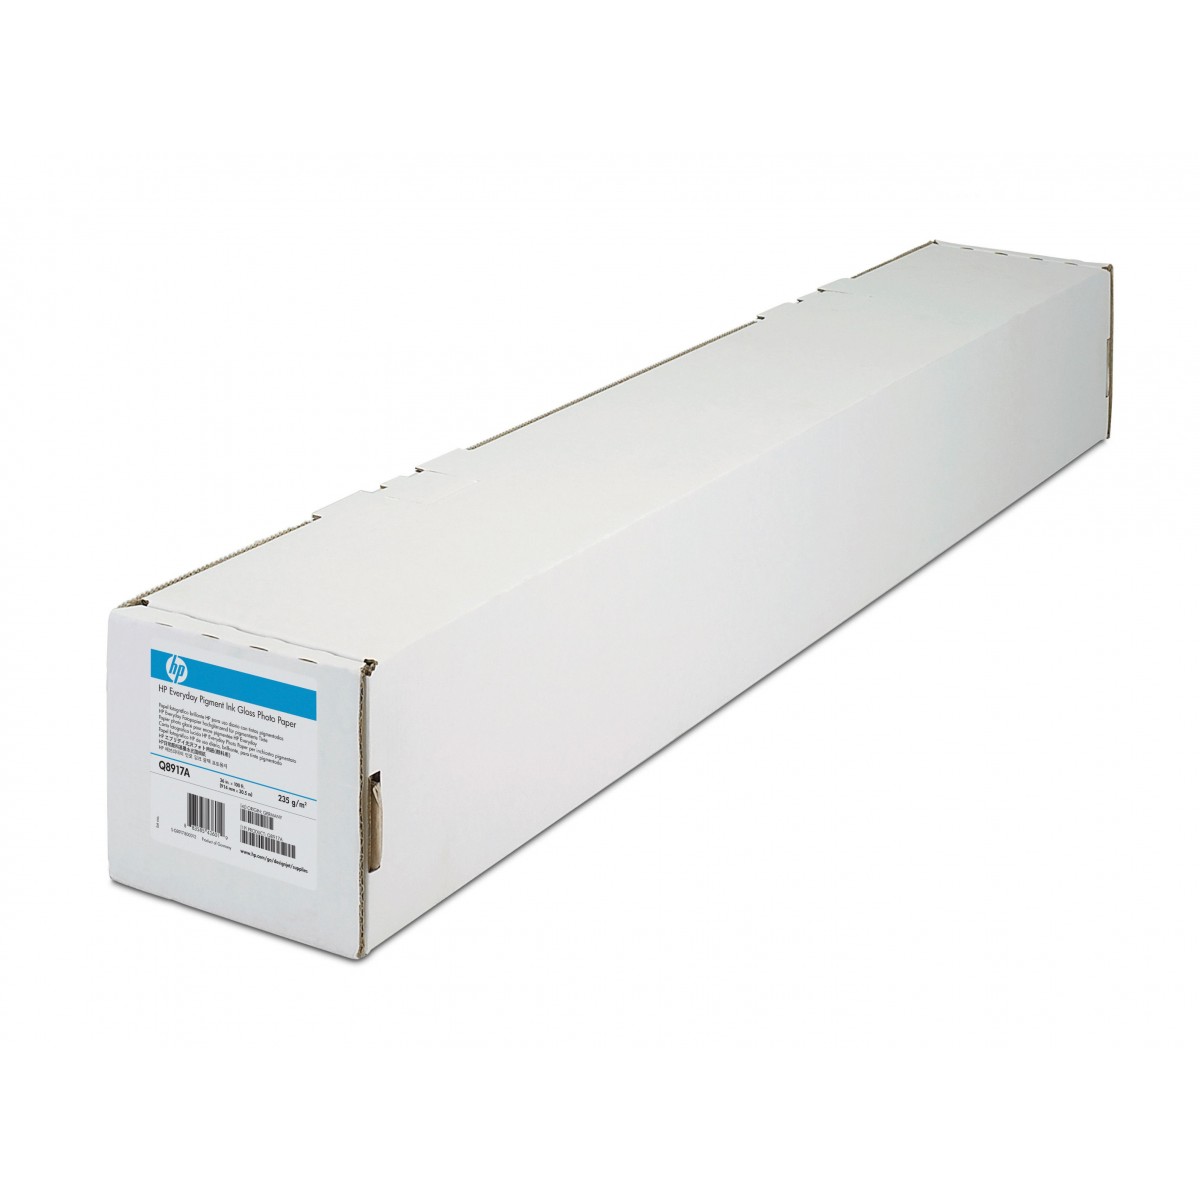 HP Q7971A - Semi-gloss - 1 sheets - White - 235 g/m² - 8.7 µm - 690 mm